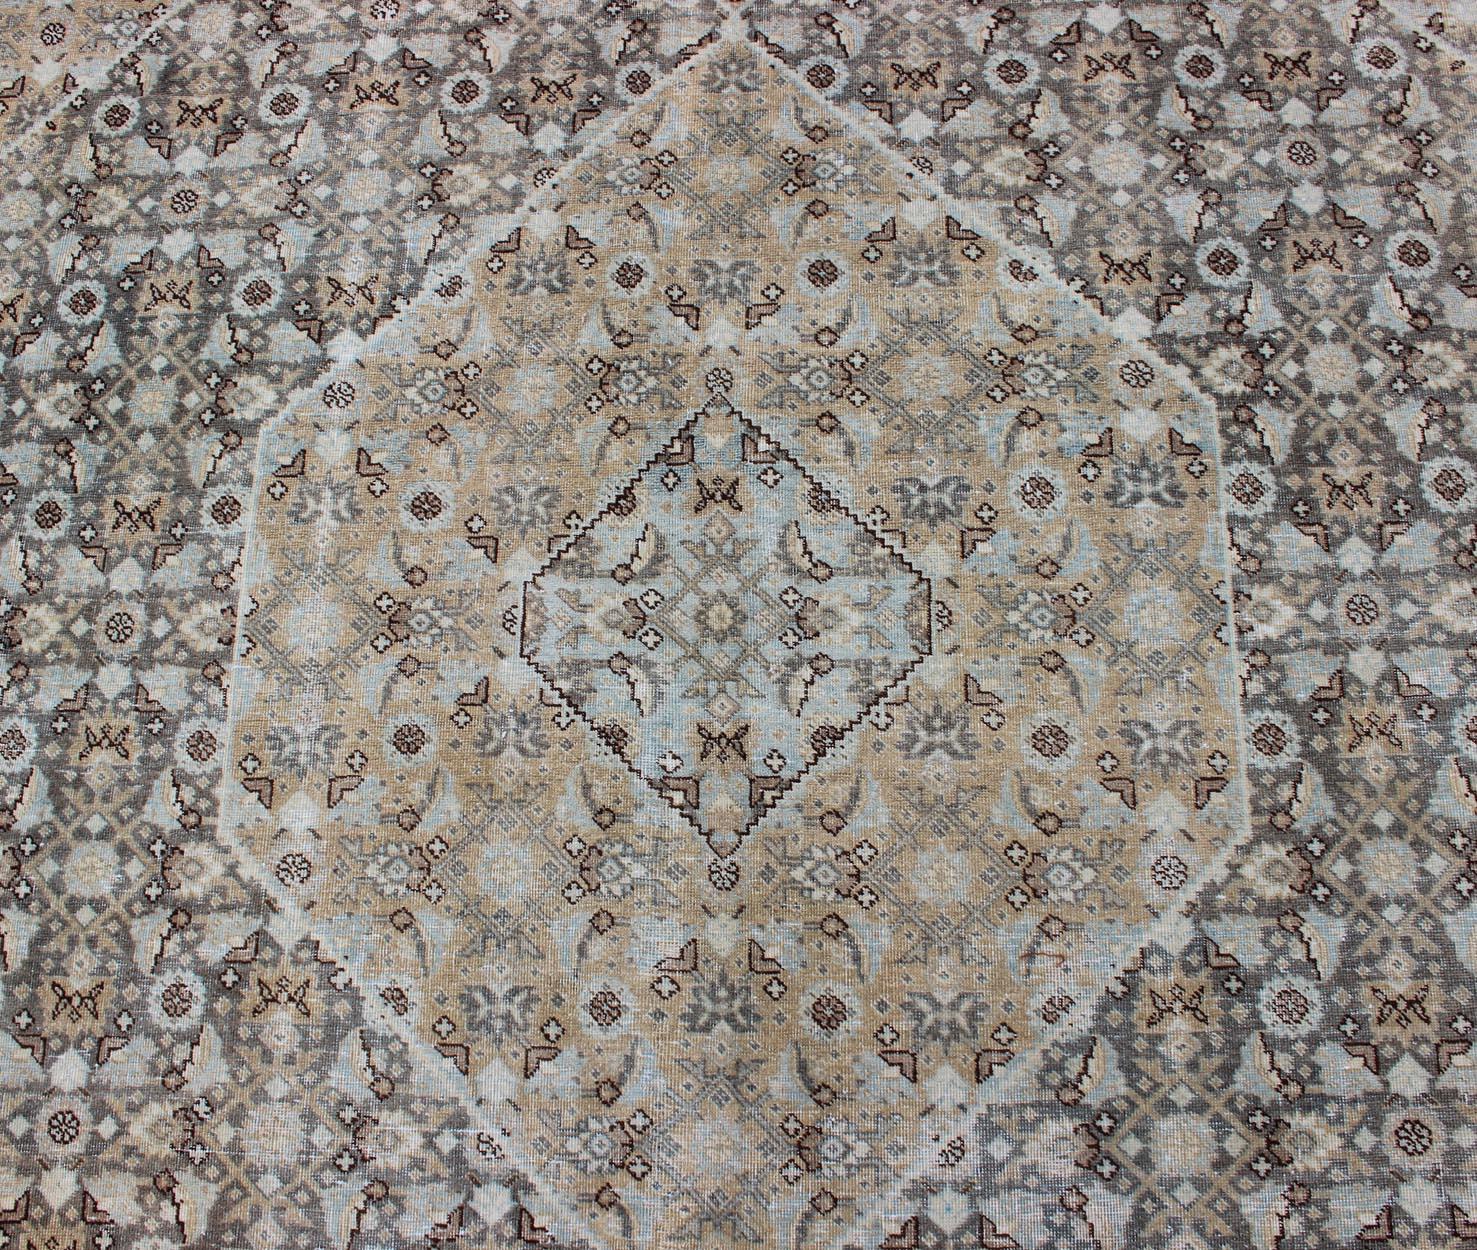 Antique Persian Tabriz Carpet with Geometric Diamond Design in Earth Tones For Sale 1